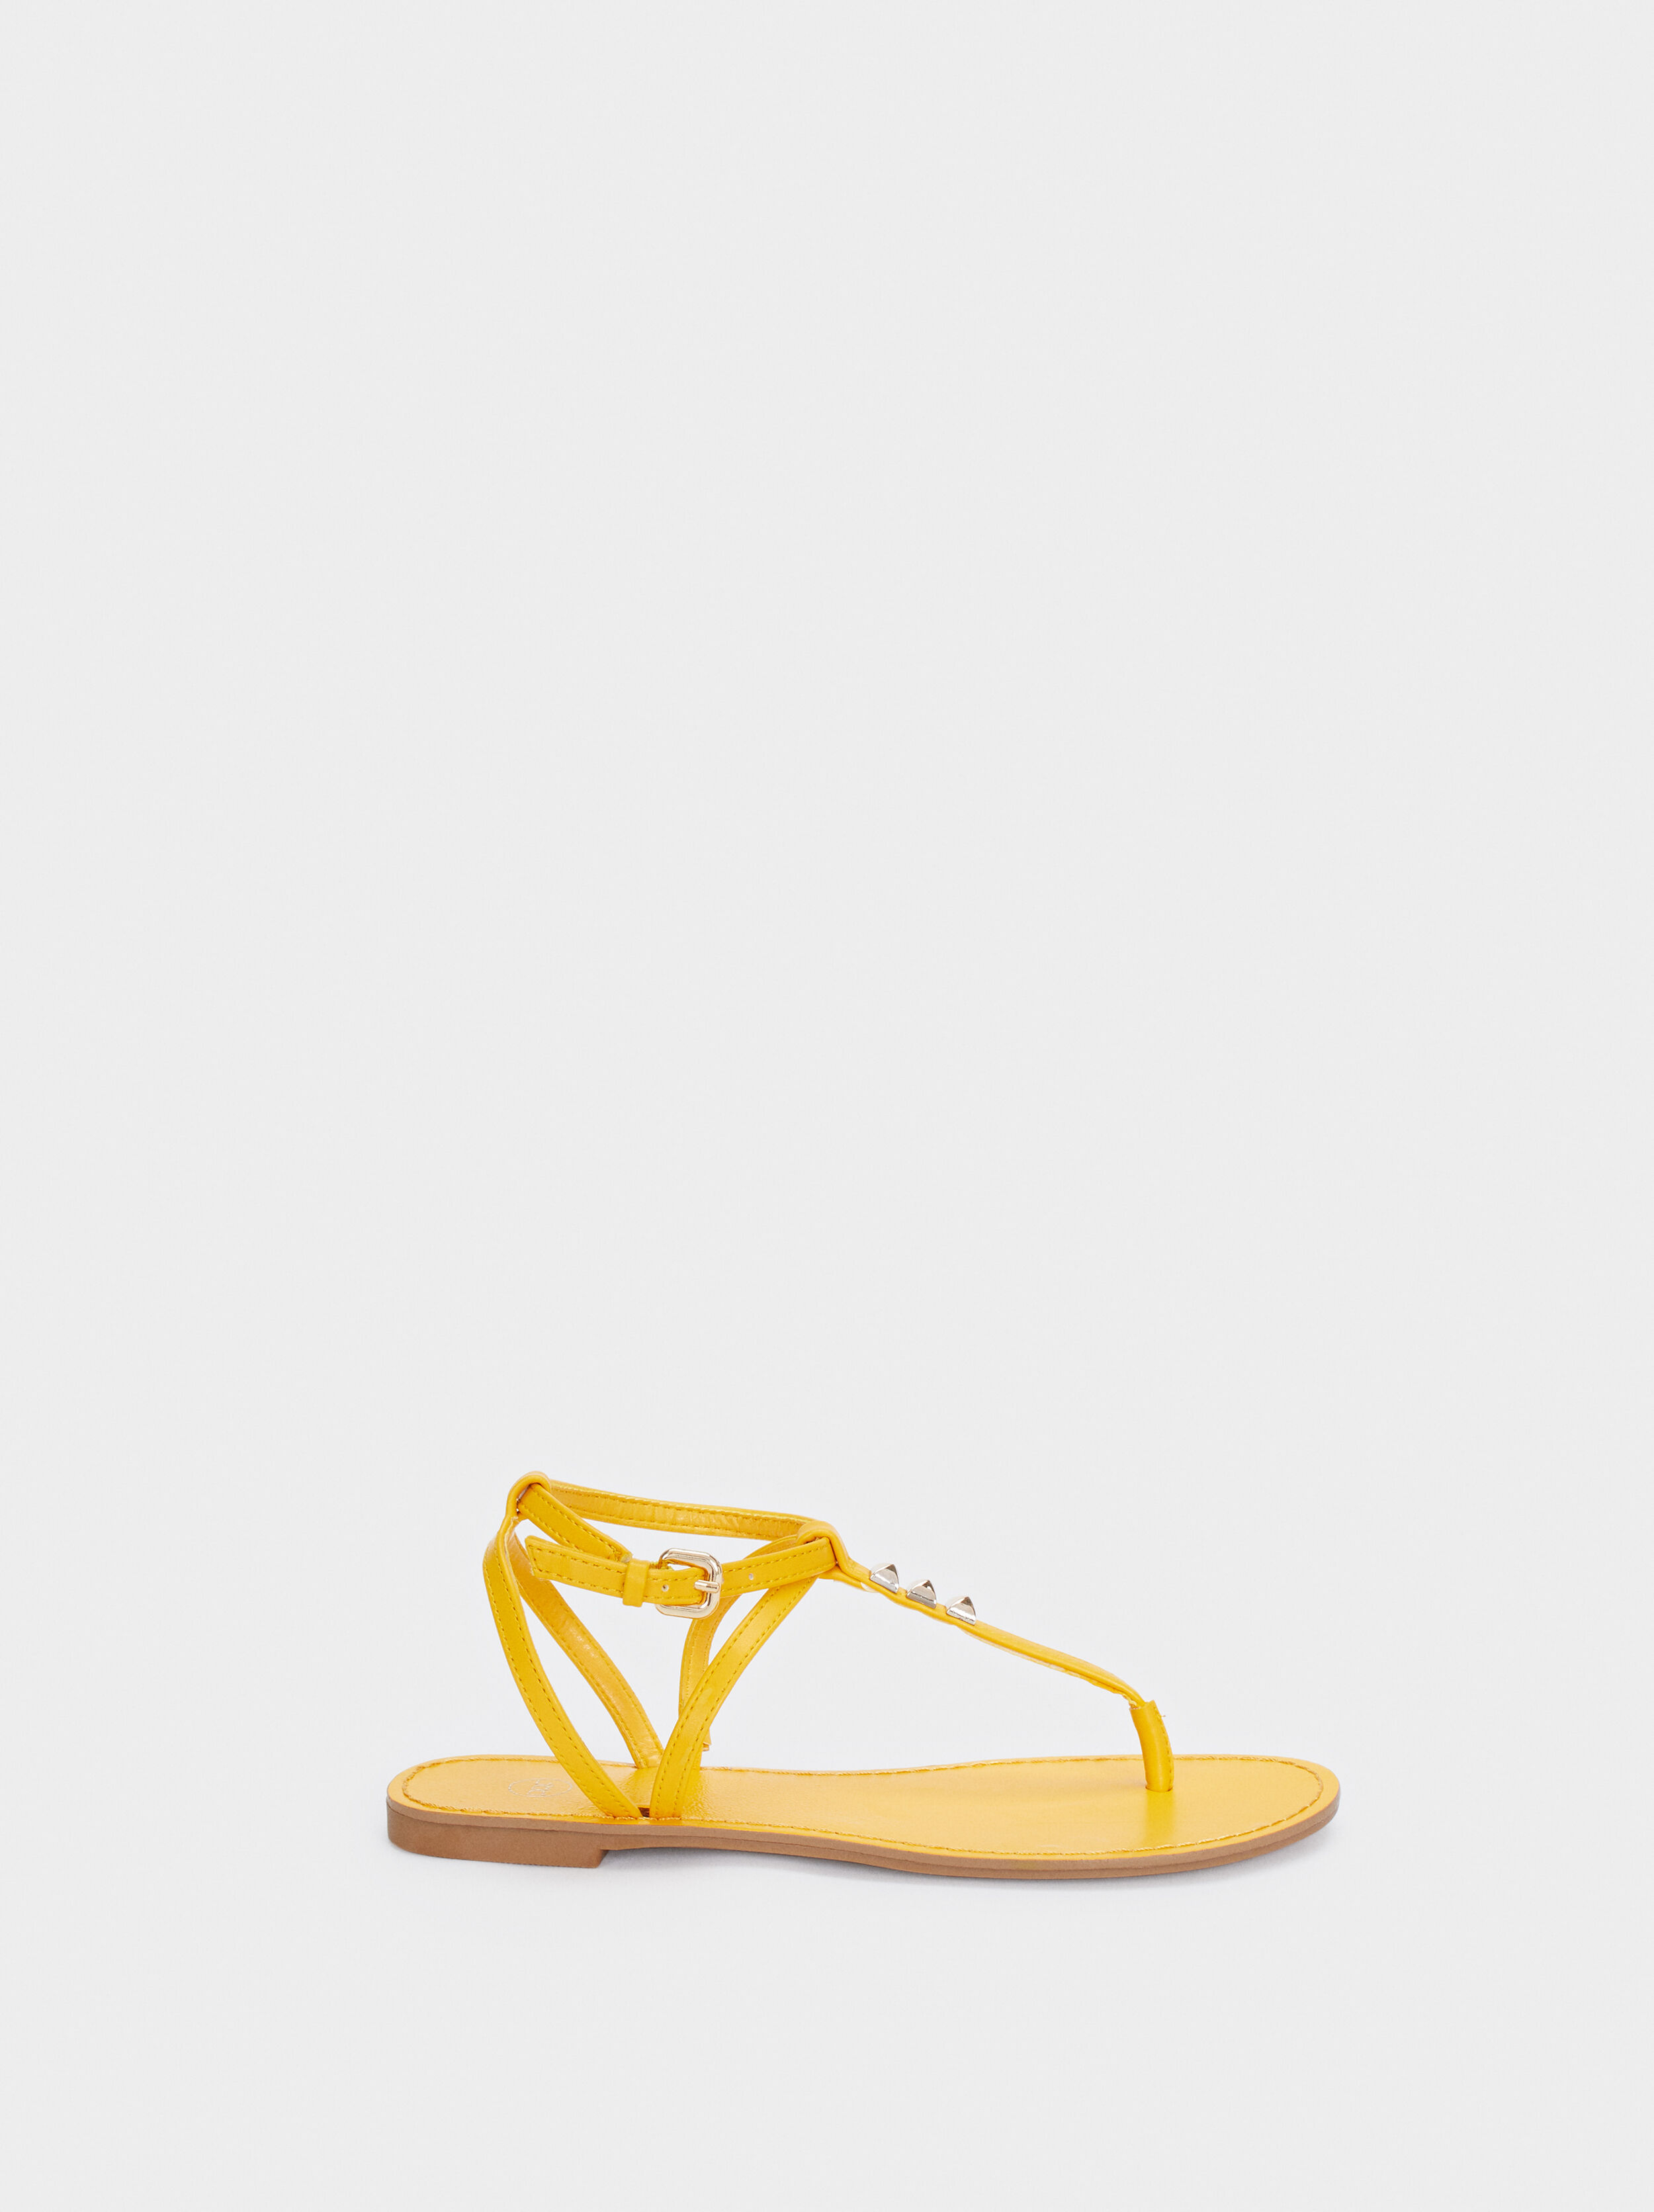 gold studded sandals flat